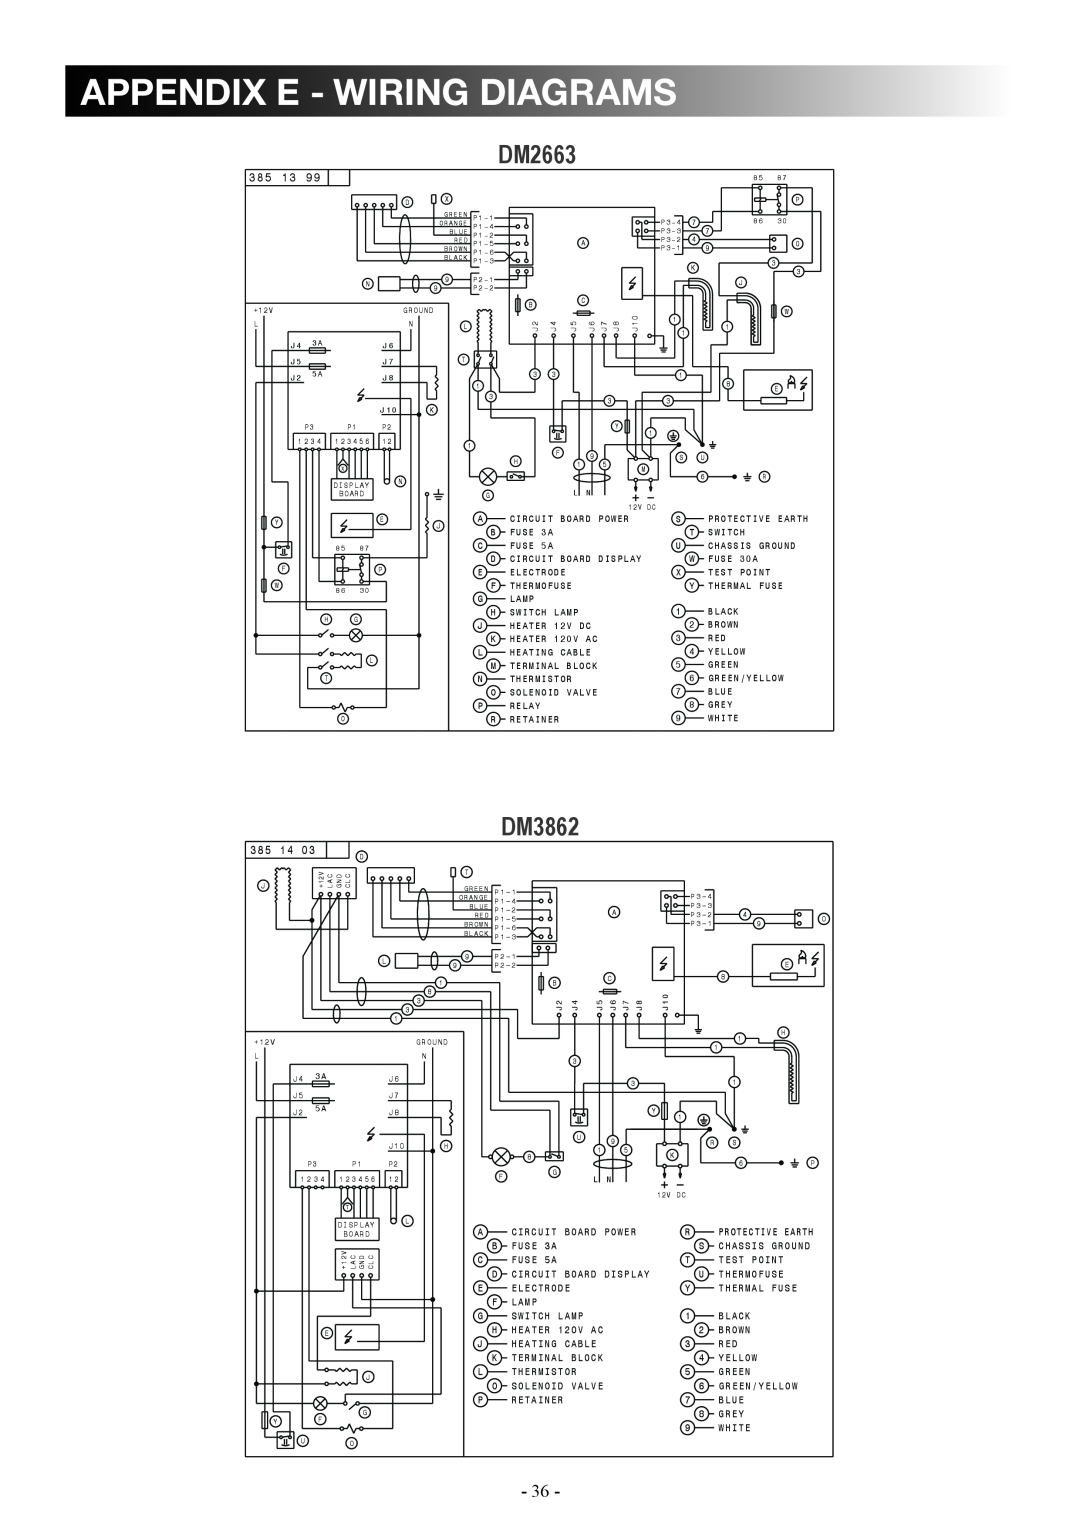 Dometic DM2862 manual appendix e - wiring diagrams, DM2663, DM3862 